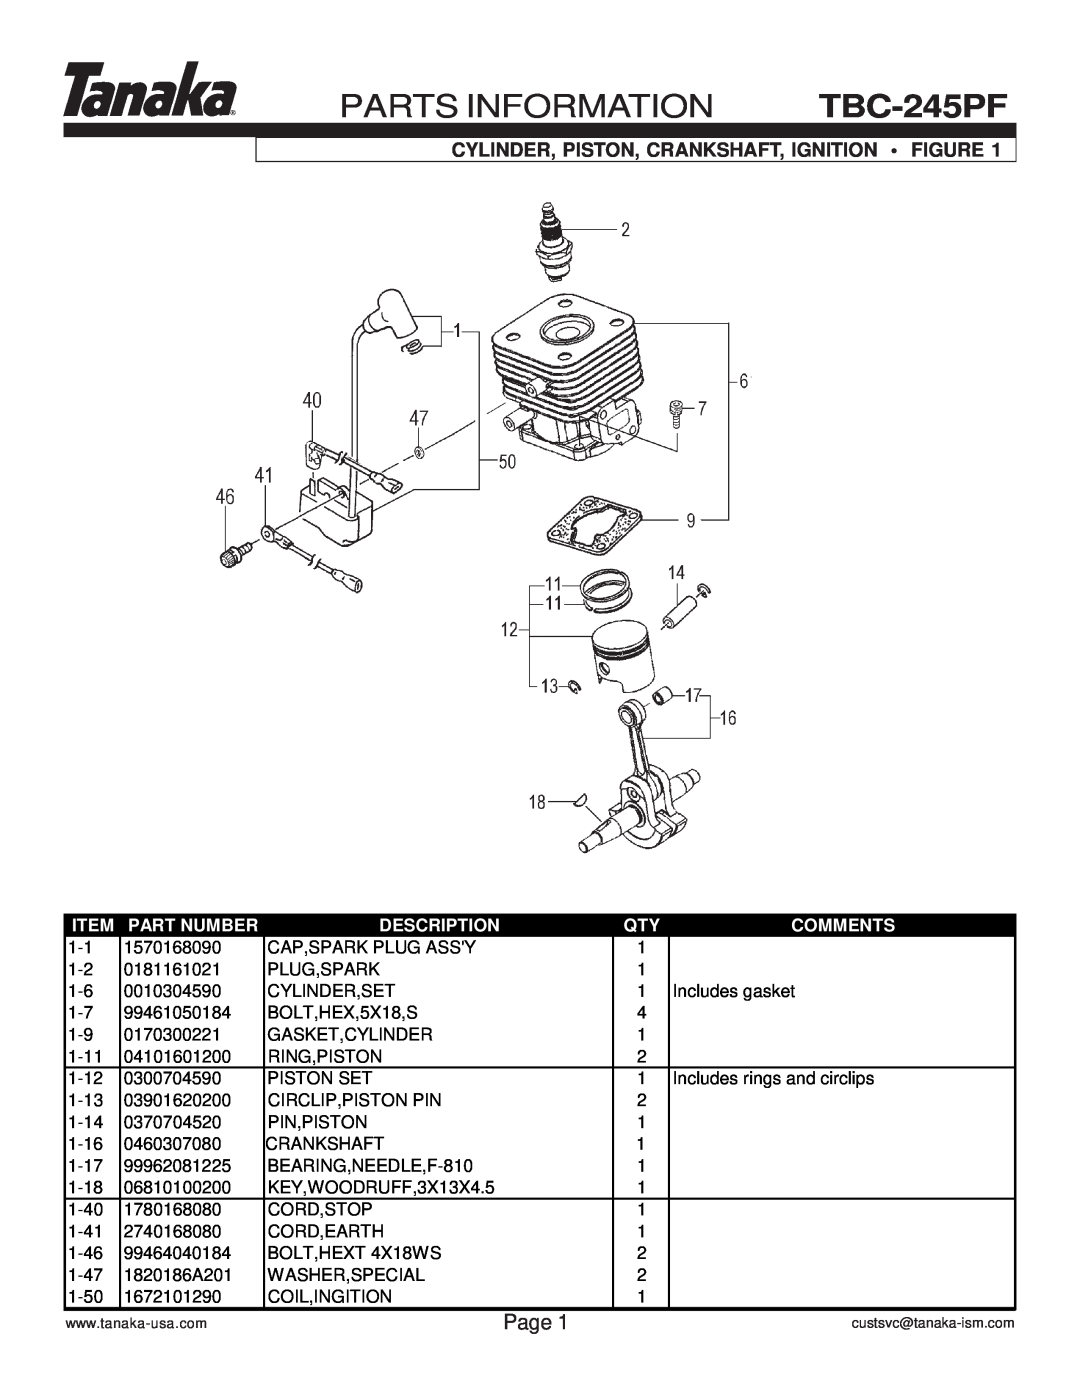 Tanaka TBC-245PF manual Parts Information, Page, Cylinder, Piston, Crankshaft, Ignition Figure, Part Number, Description 